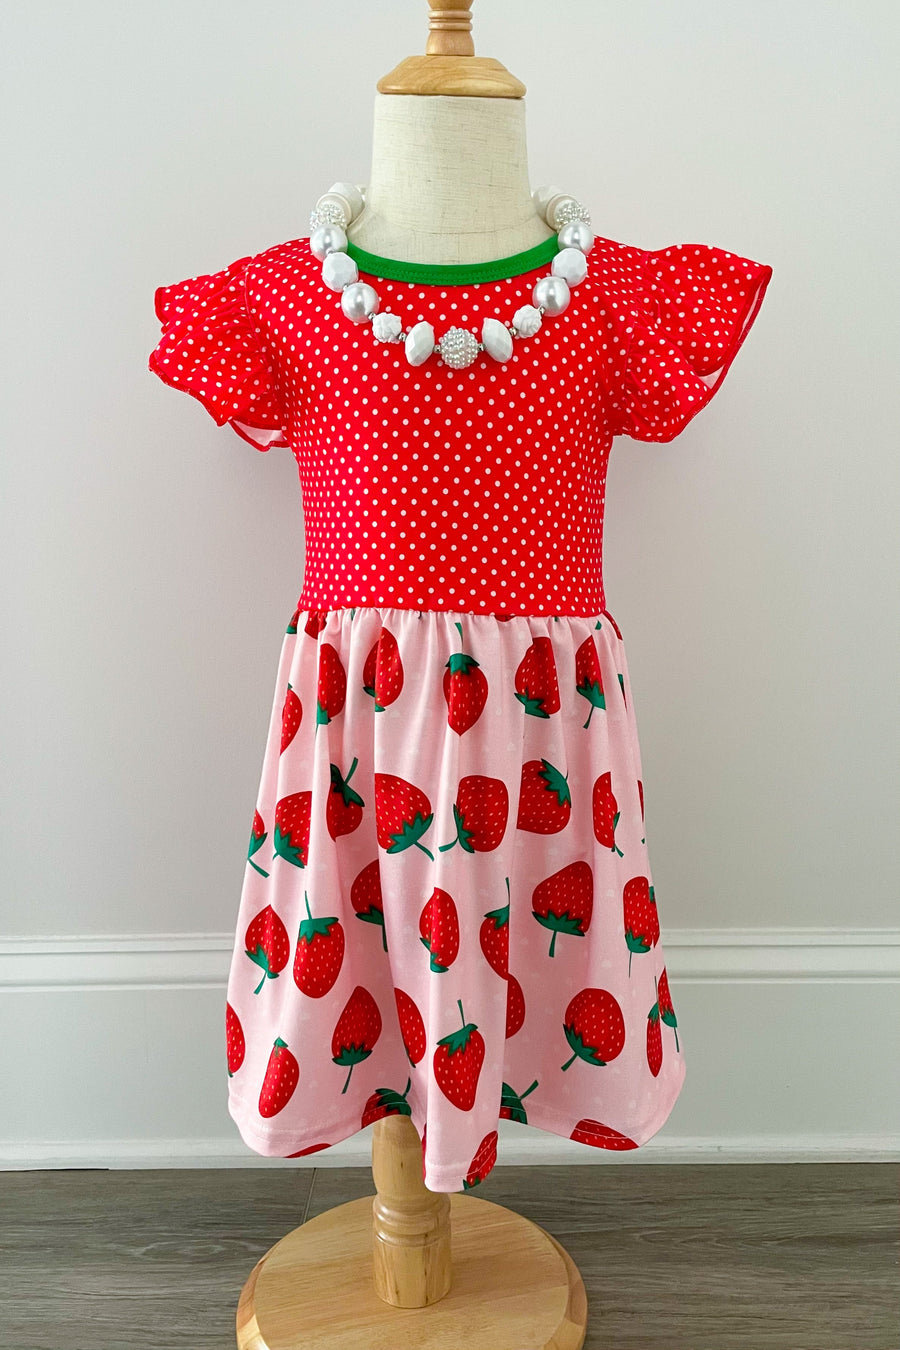 Strawberry Patch Boutique Dress - Rylee Faith Designs